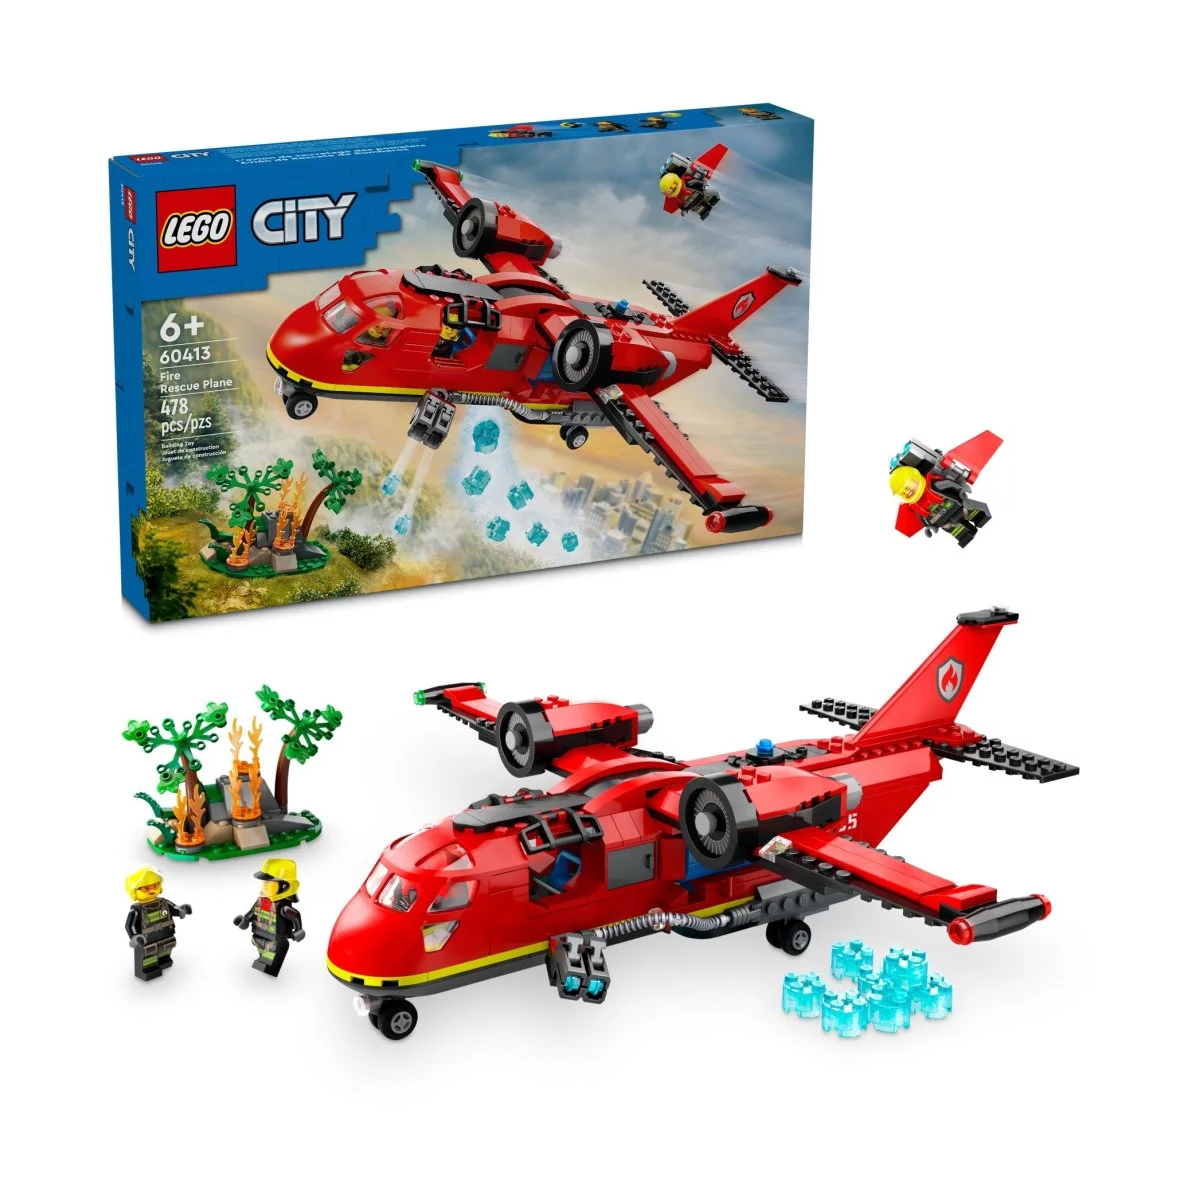 Конструктор Lego City Fire Rescue Plane 60413, 478 деталей lego city 30368 fire rescue water scooter 32 дет